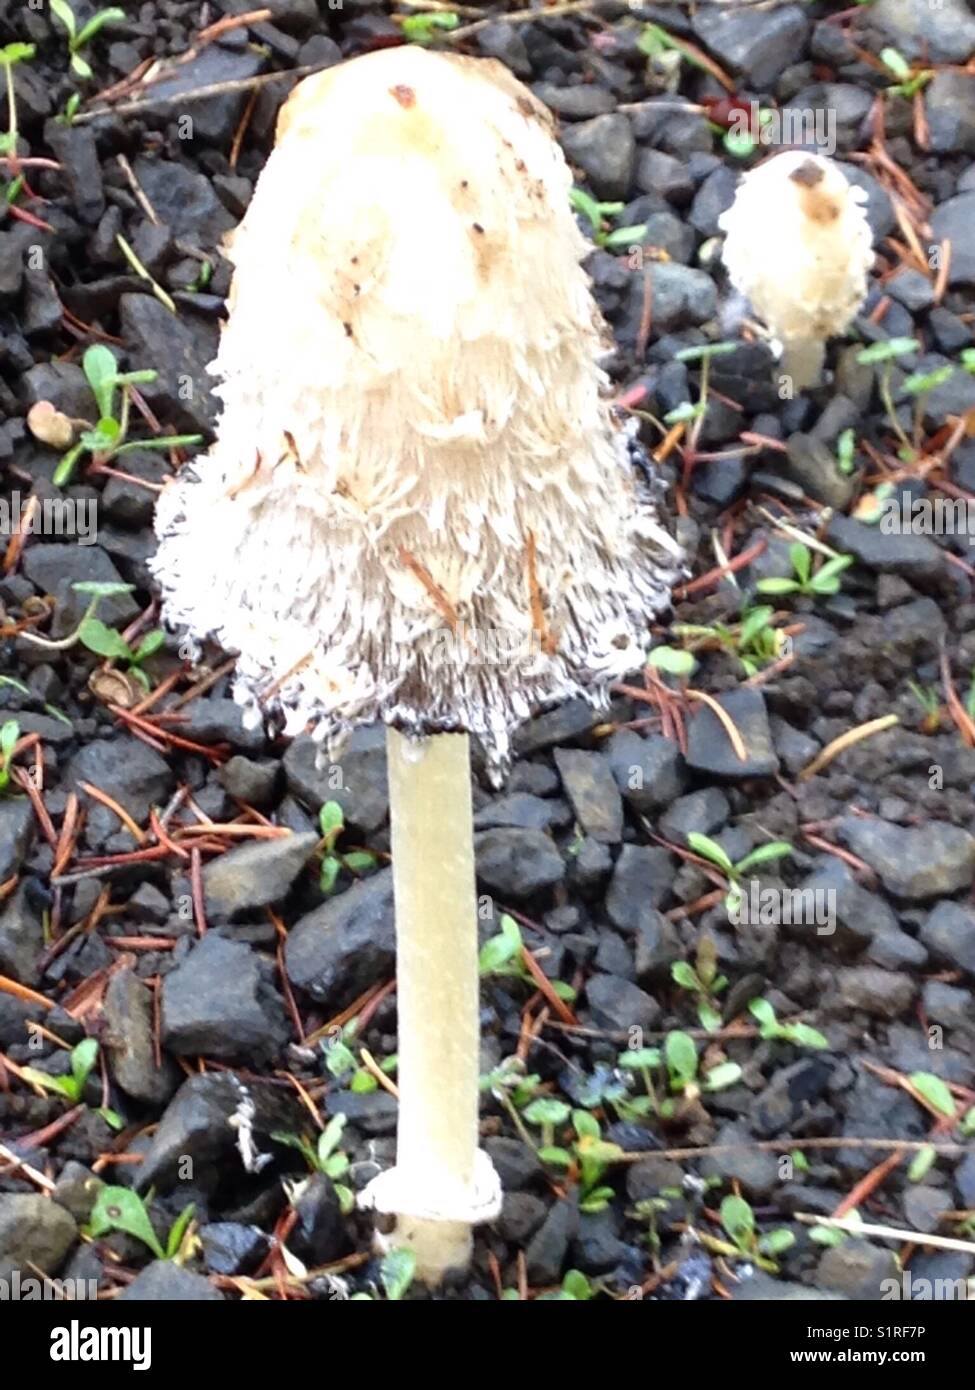 The Shaggy Mane wild mushroom (Coprinus Comatus)   The cap will melt into black goo. Two. Stock Photo